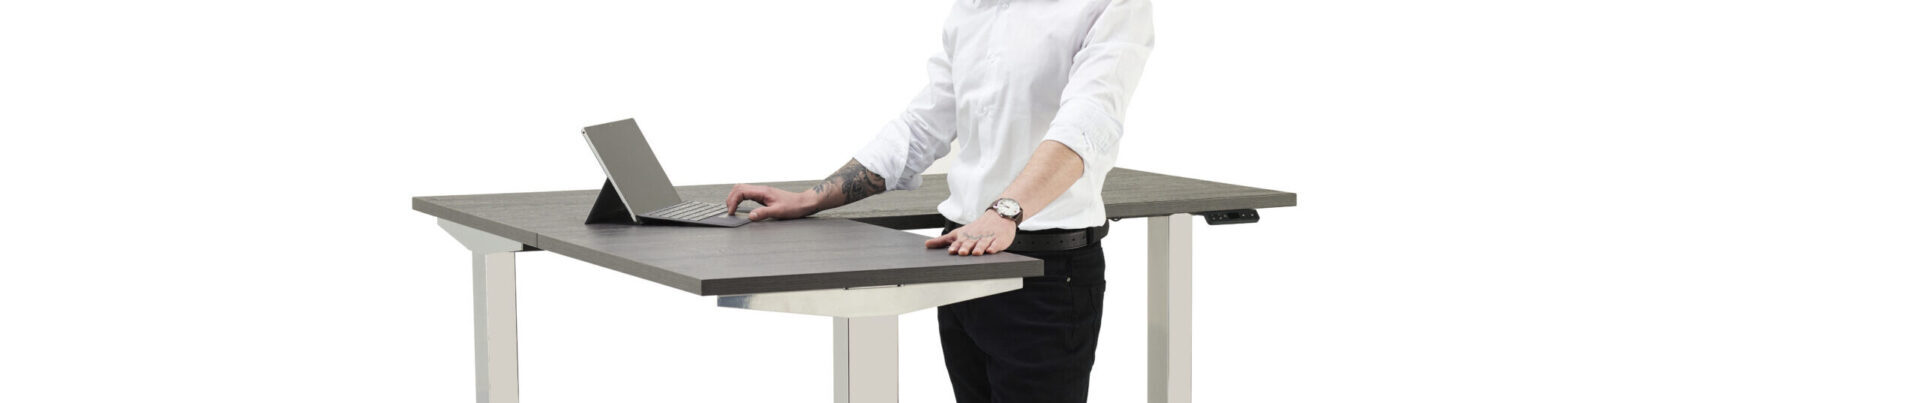 why use height adjustable desks - Lavoro Design